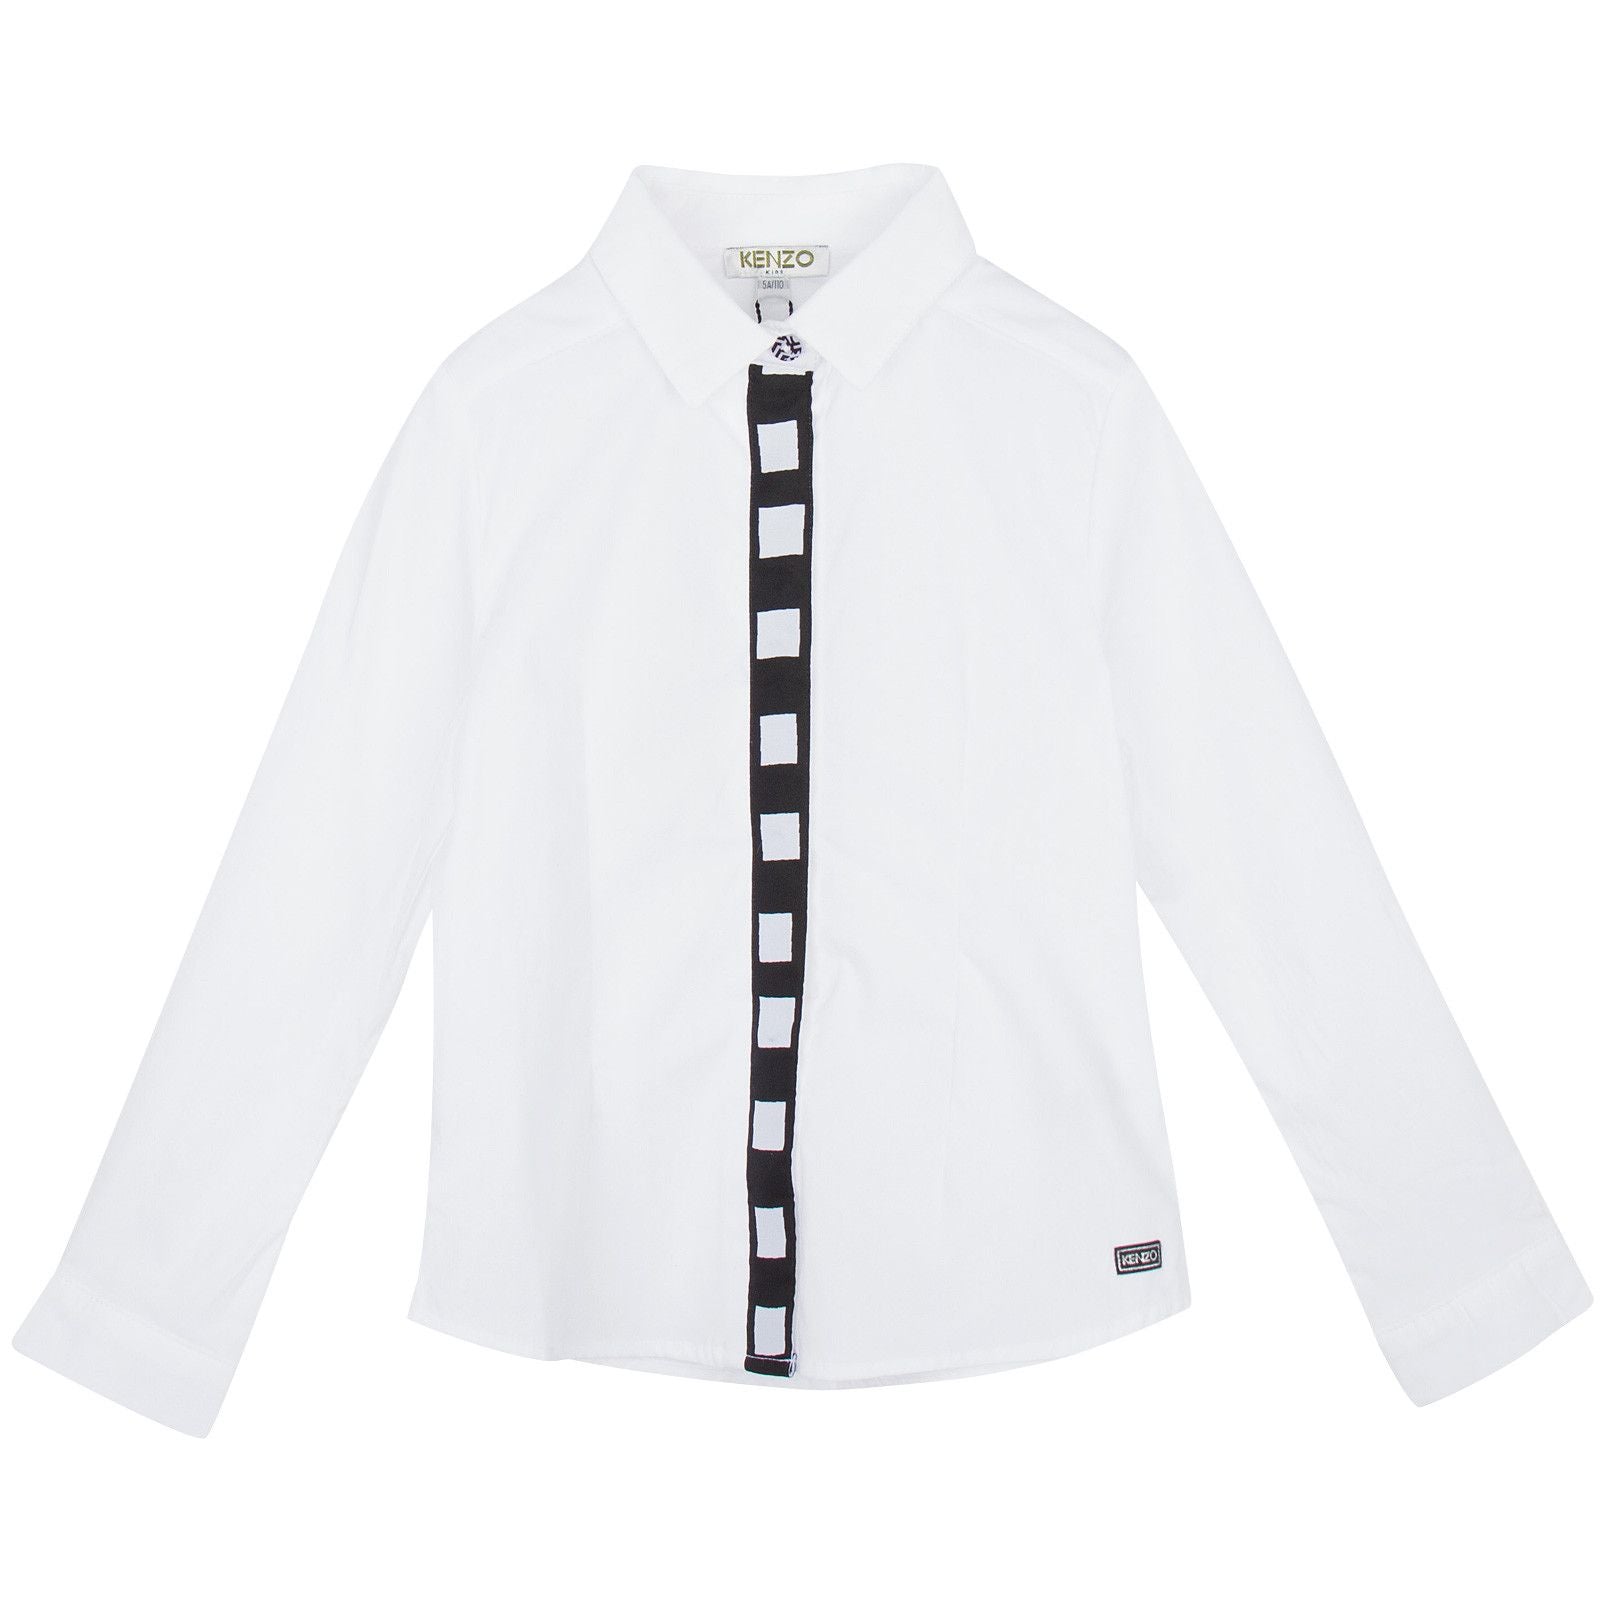 Girls White Cotton Blouse With Black&White Cube Print Buttons - CÉMAROSE | Children's Fashion Store - 1